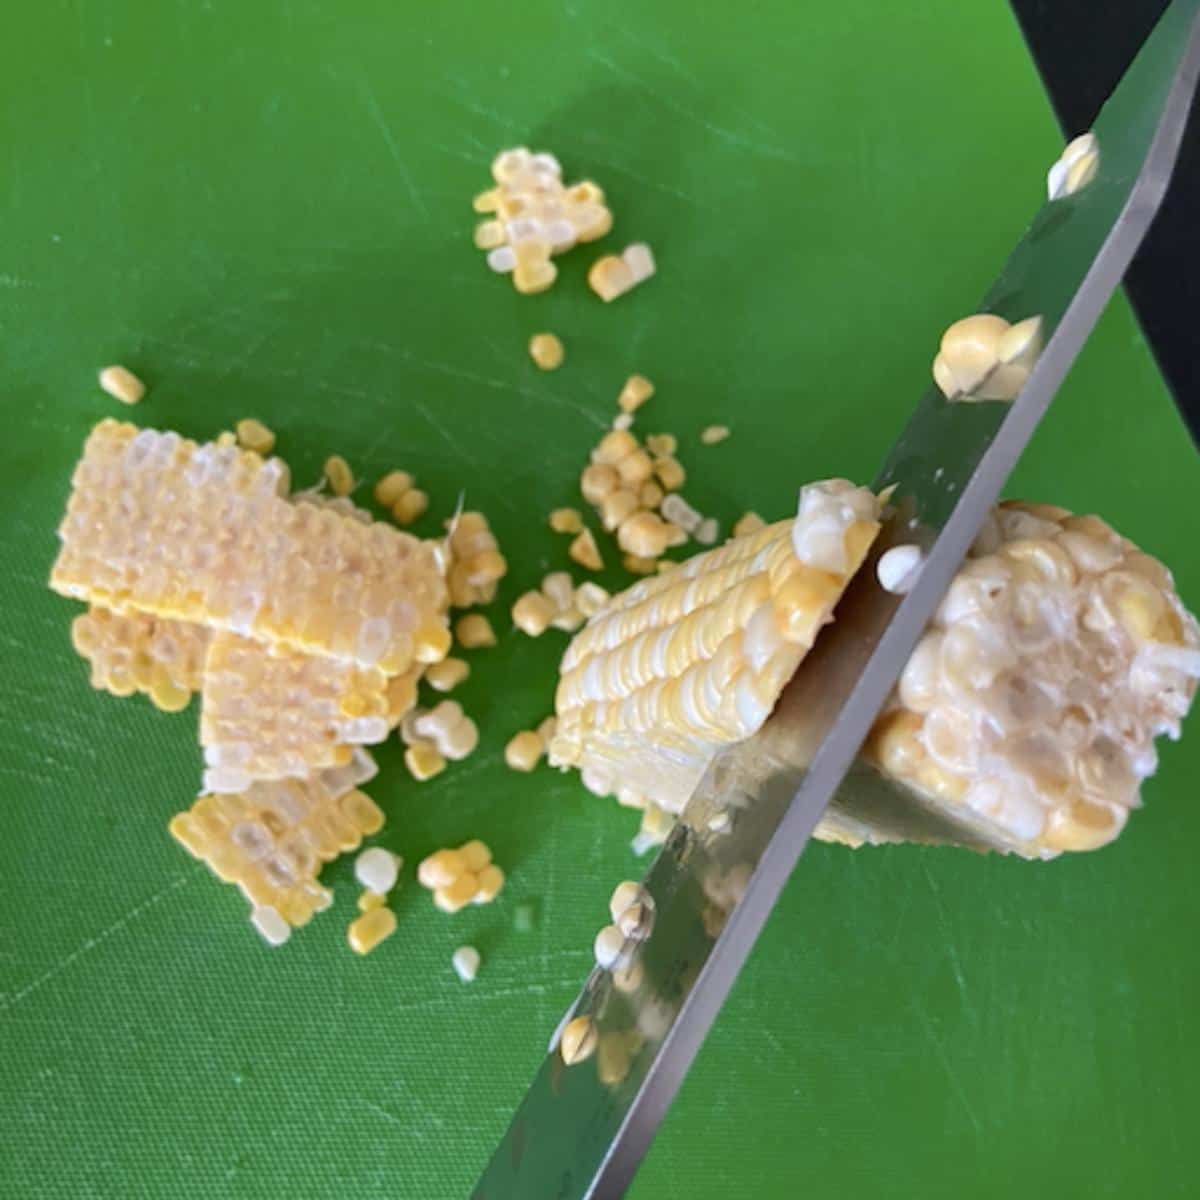 knife slicing corn off the cob on a cutting board